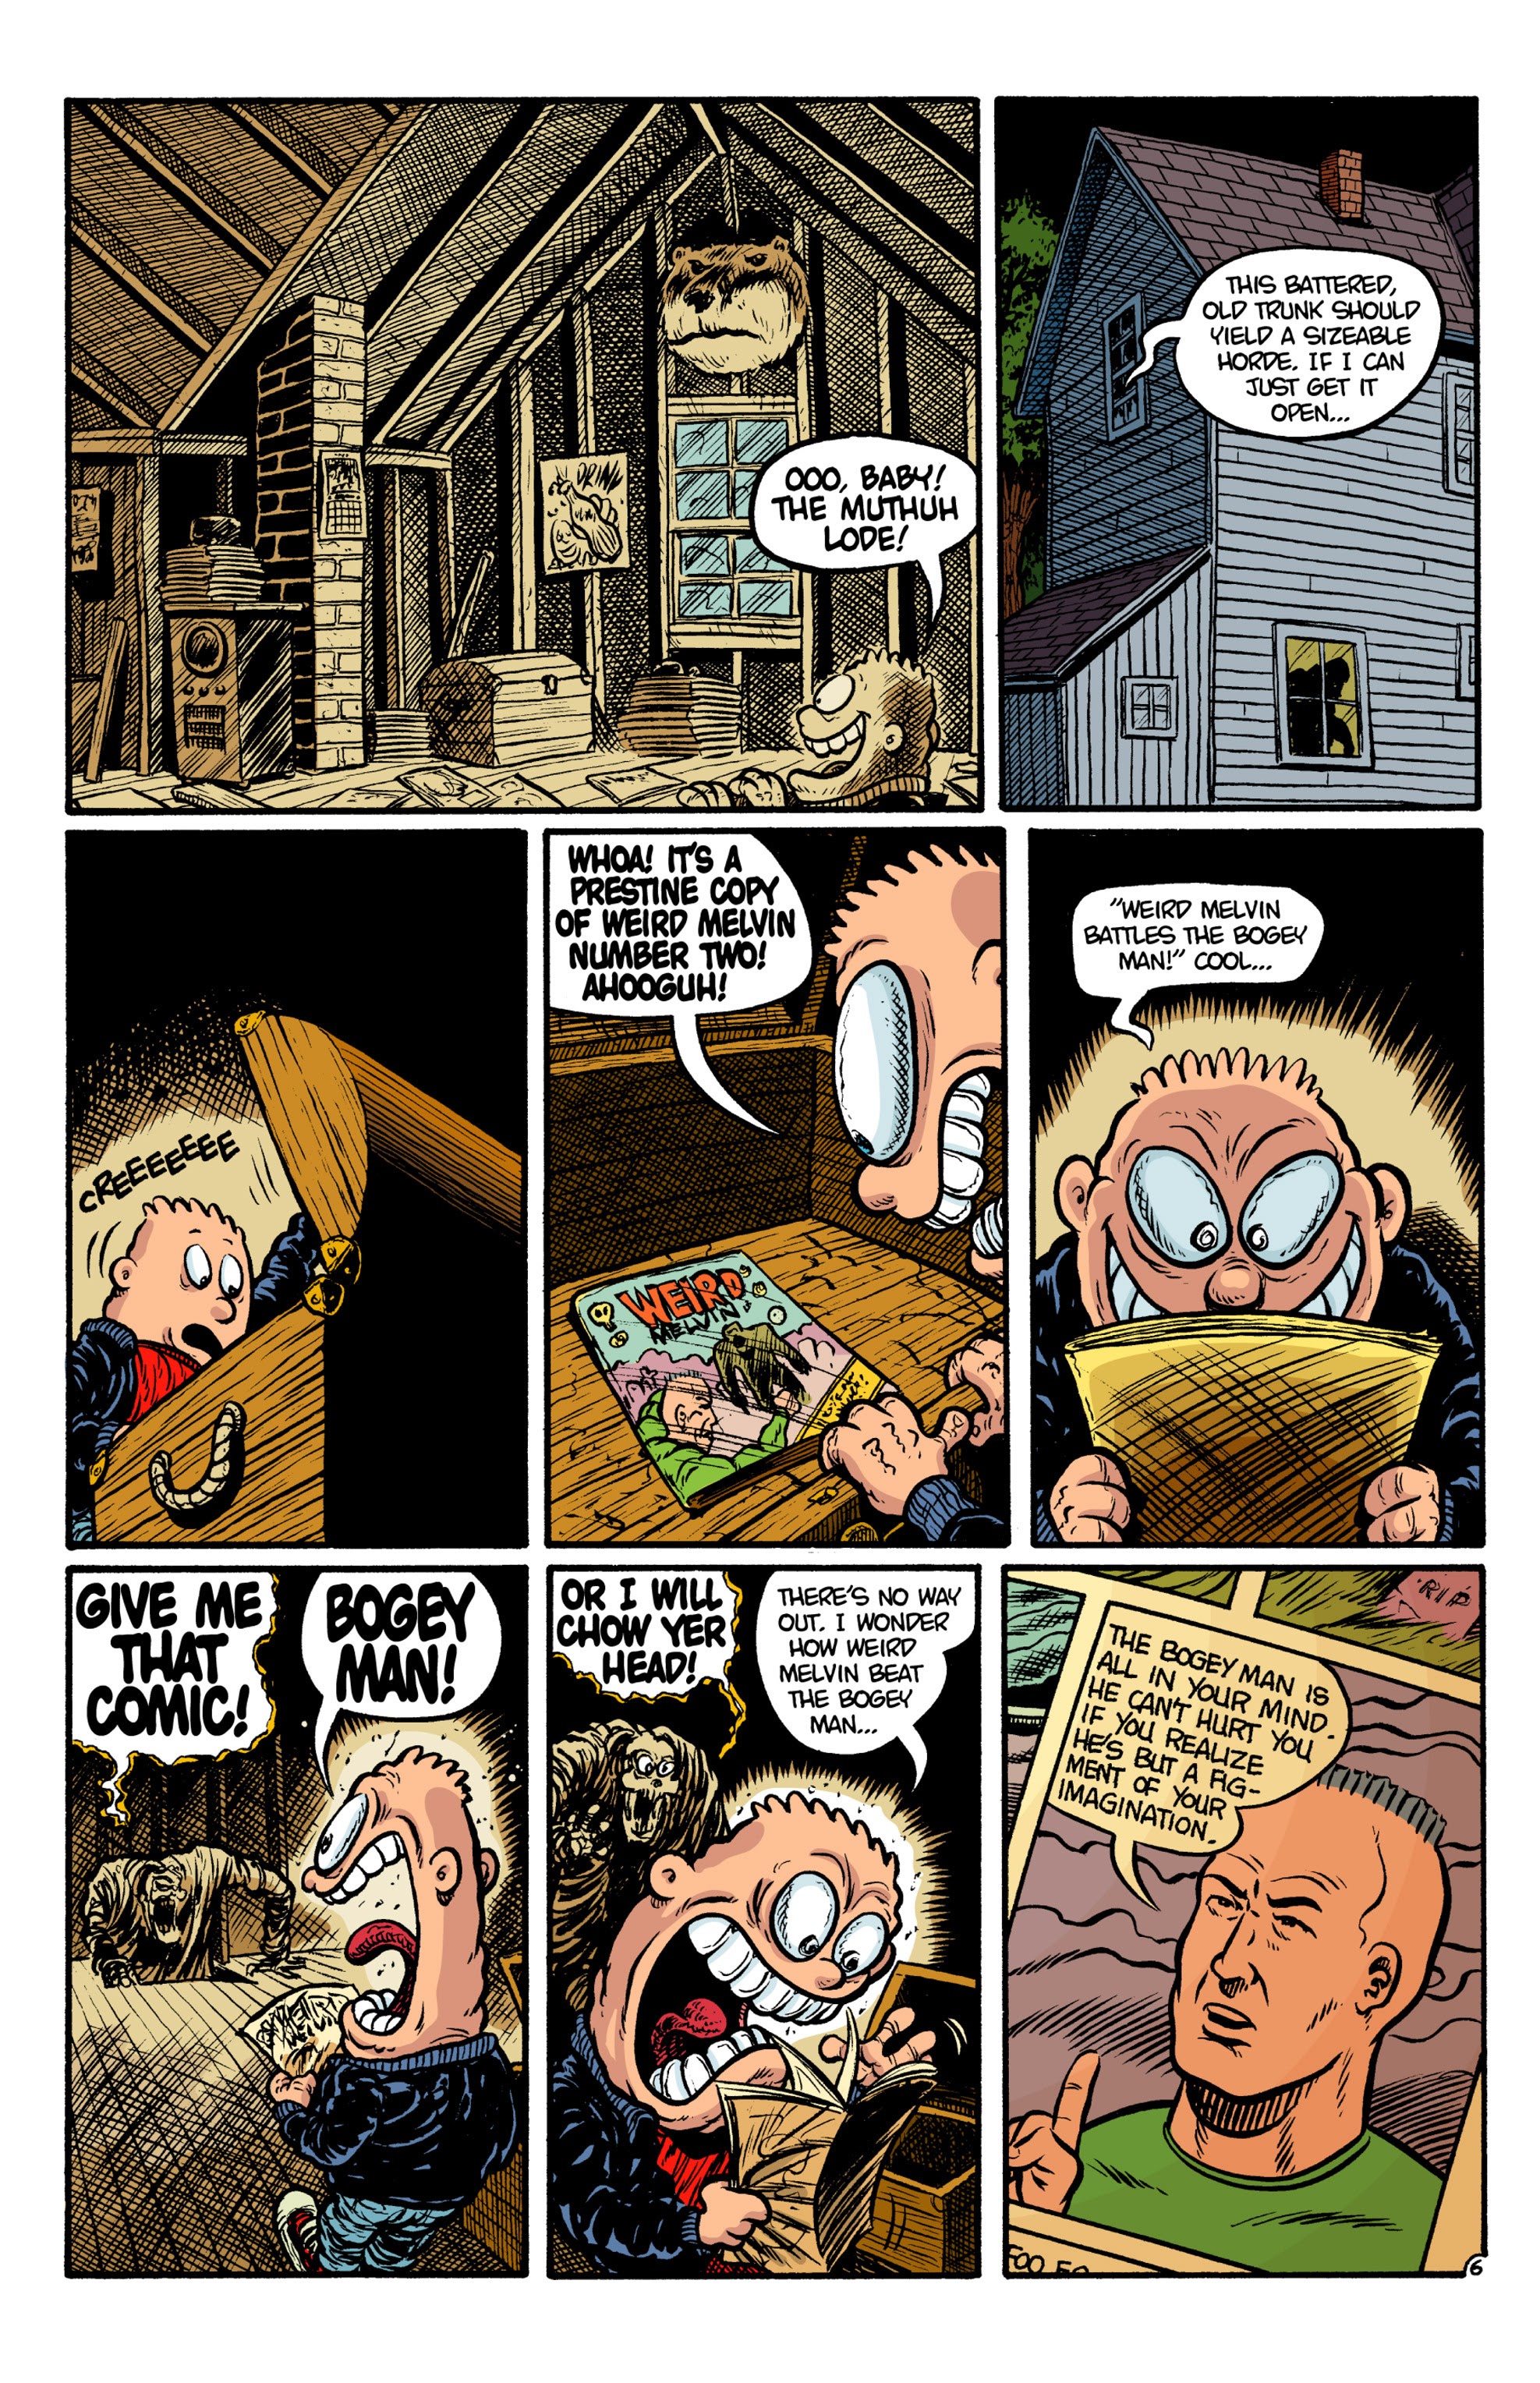 Read online Weird Melvin comic -  Issue #5 - 19